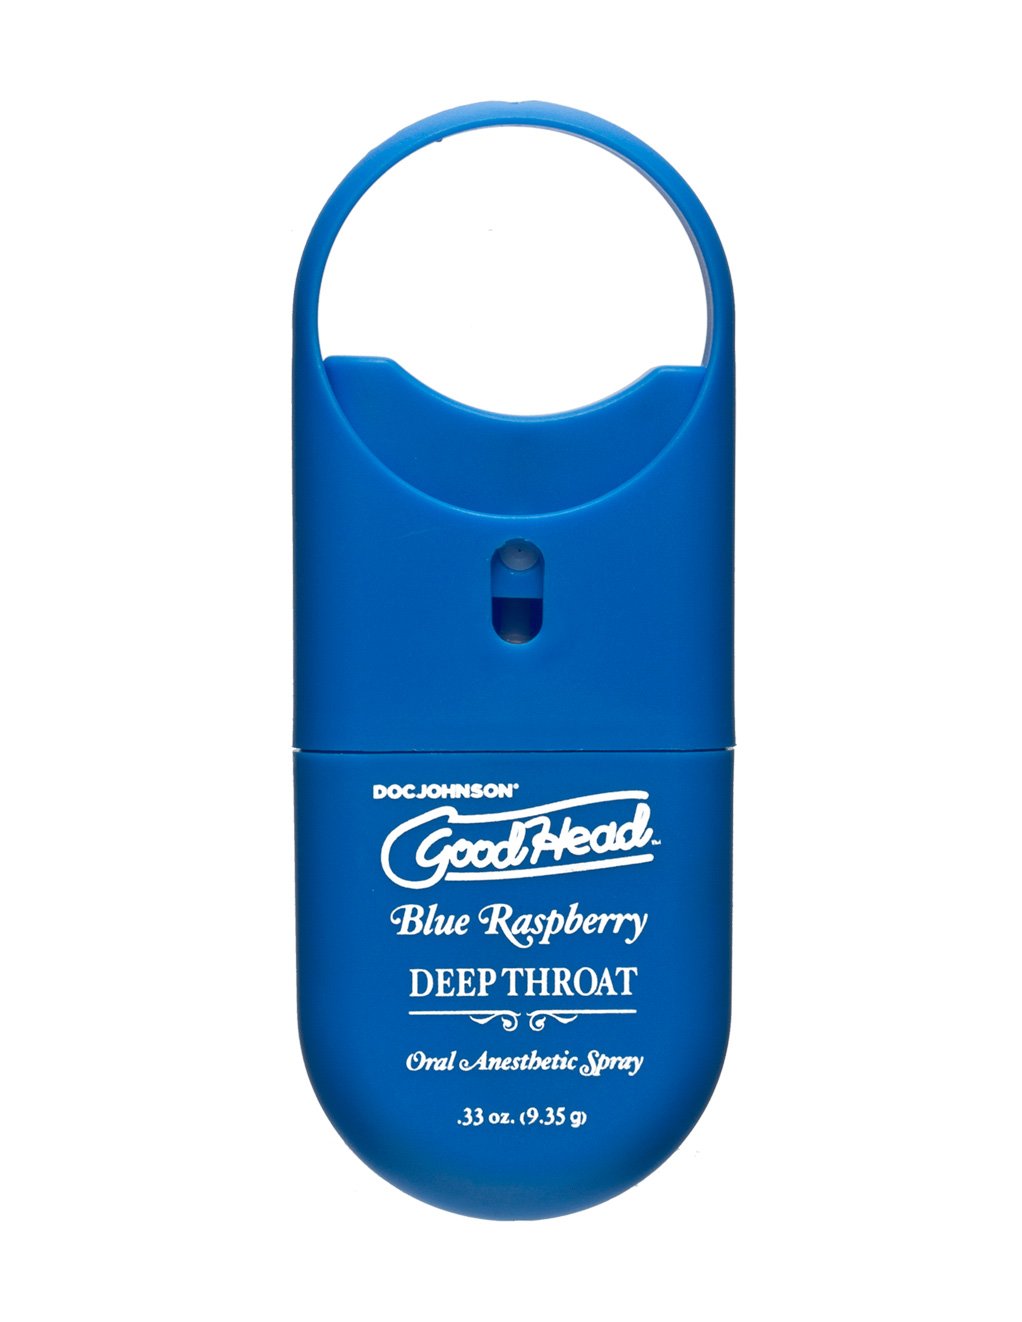 GoodHead Deep Throat To Go Desensitizing Spray- Raspberry